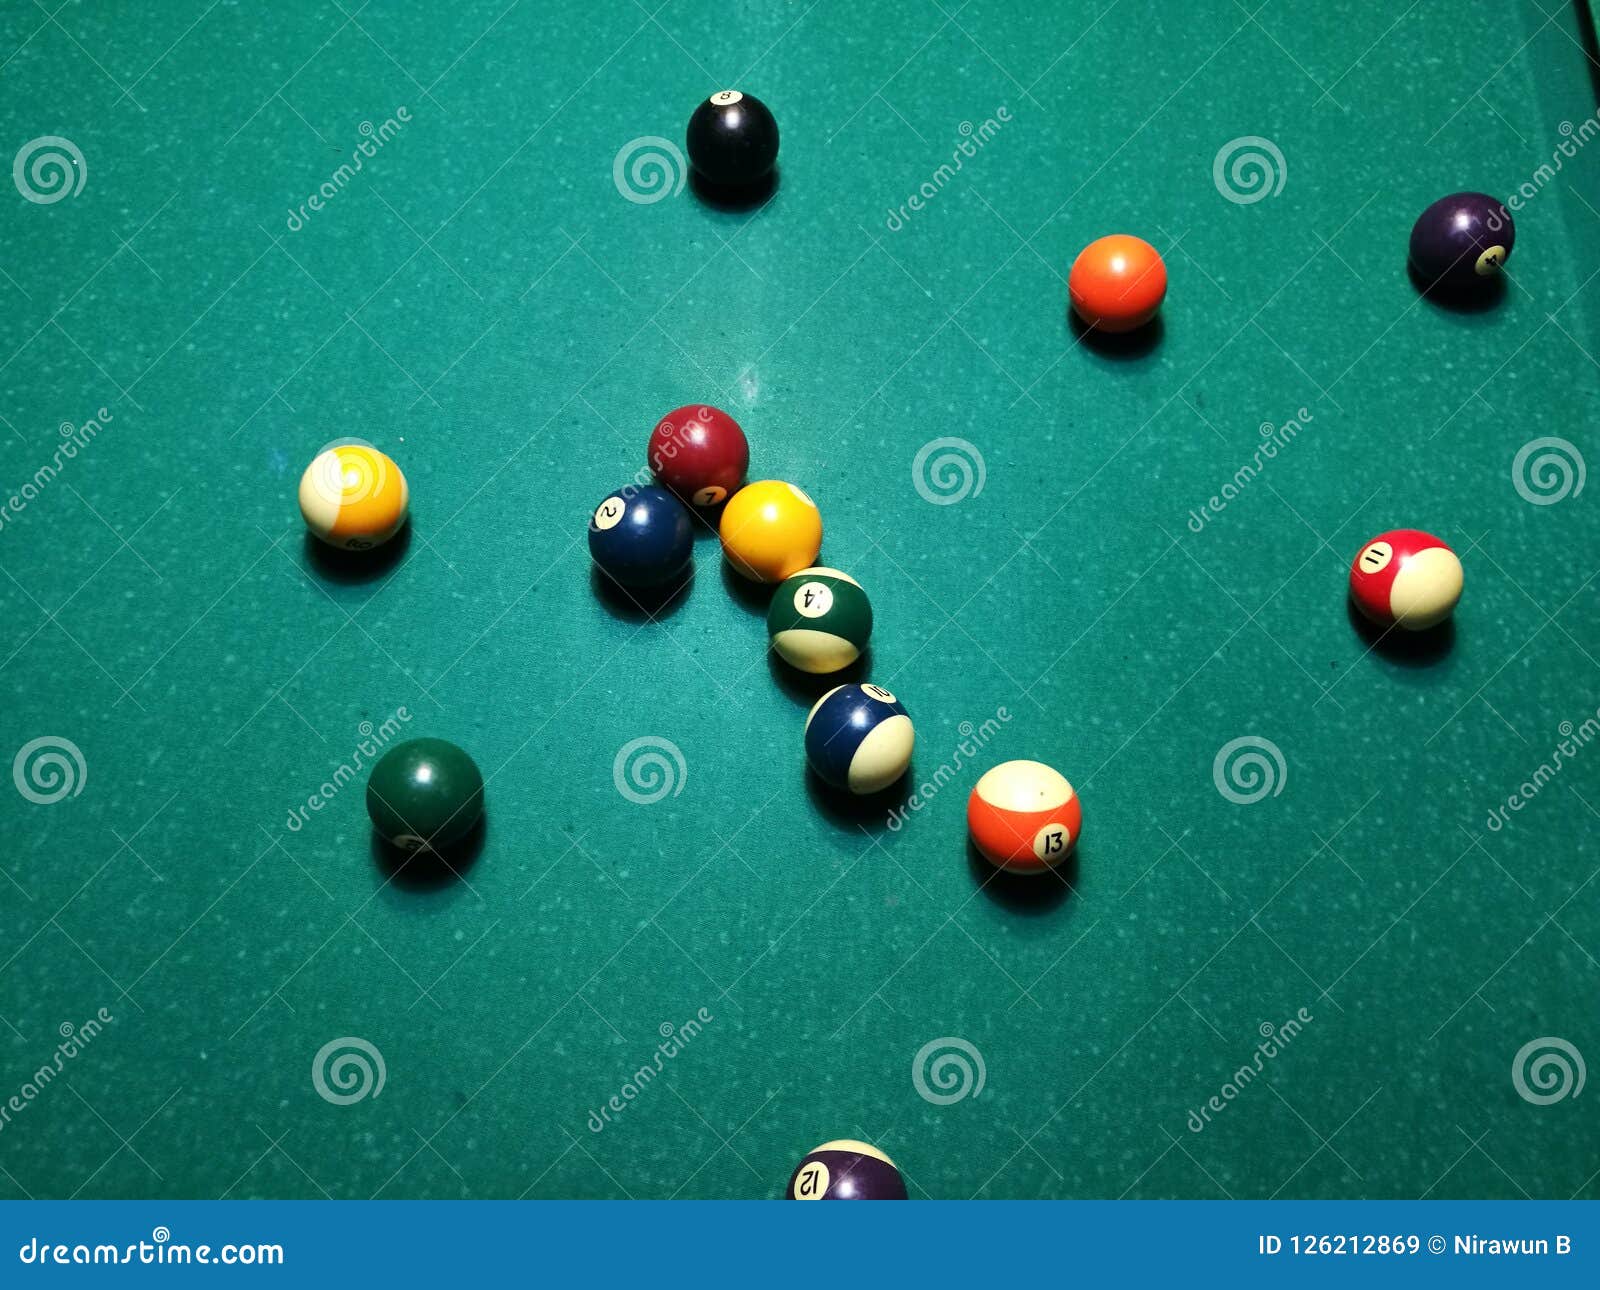 Cue Aim Billiard Snooker Pyramid on Green Table